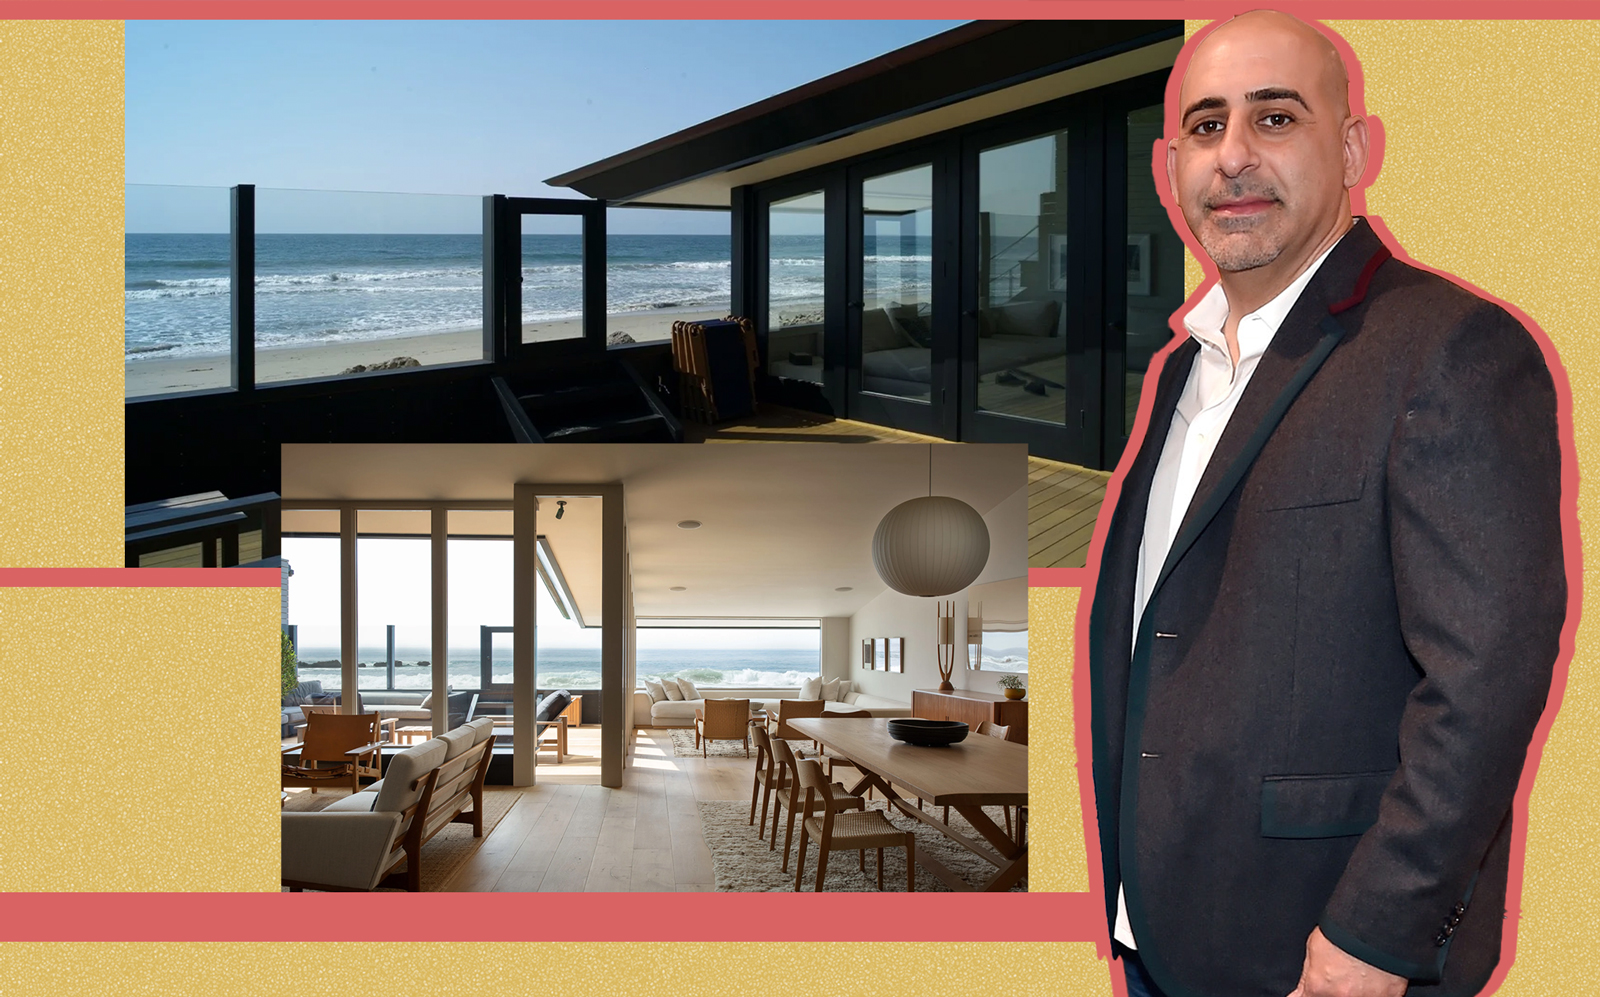 Morphe co-founder Chris Tawil and the Malibu beach house. (Photos via Getty; Hilton & Hyland)